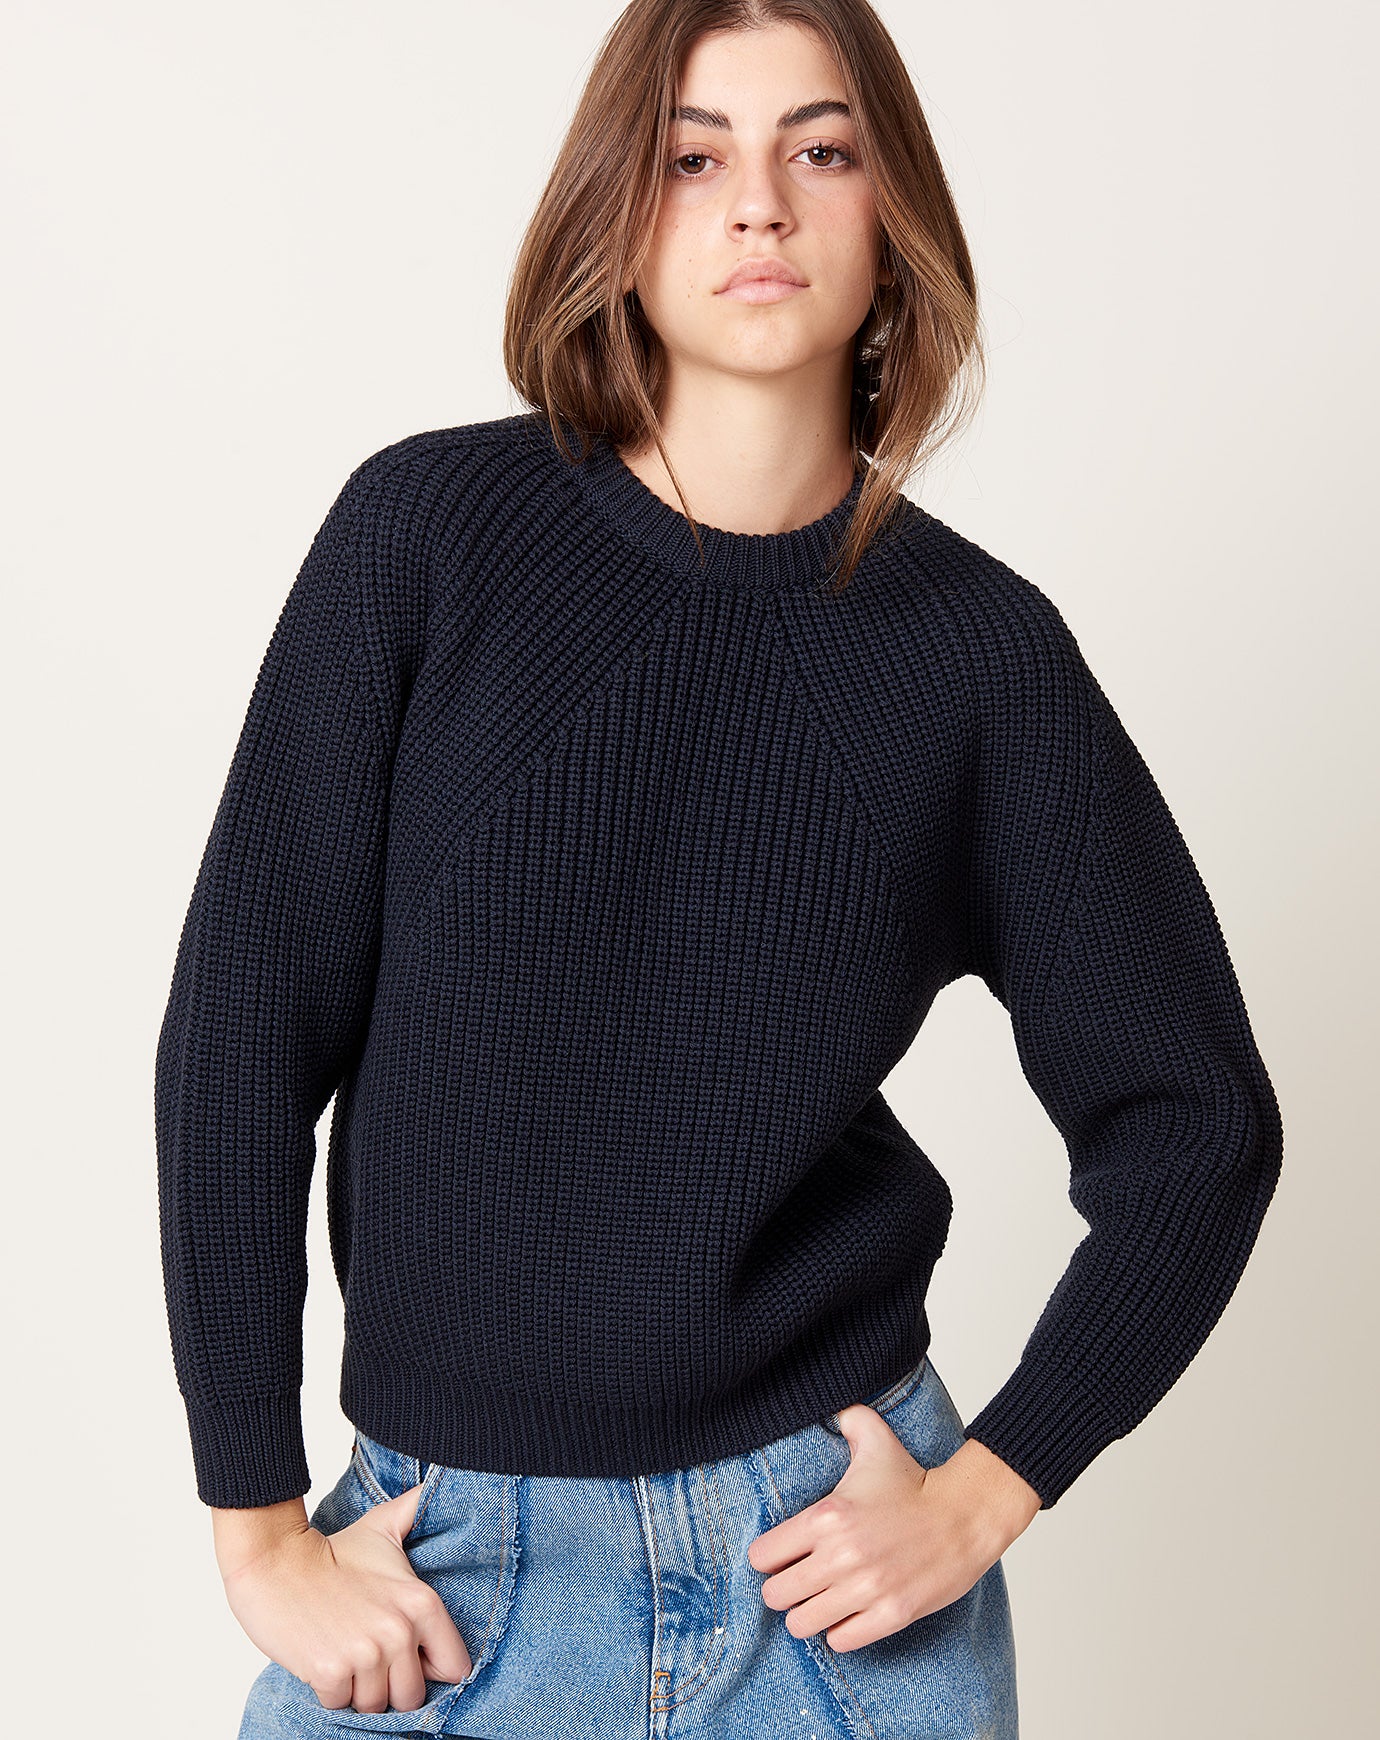 Crew Neck Sweater for Women: Offsite